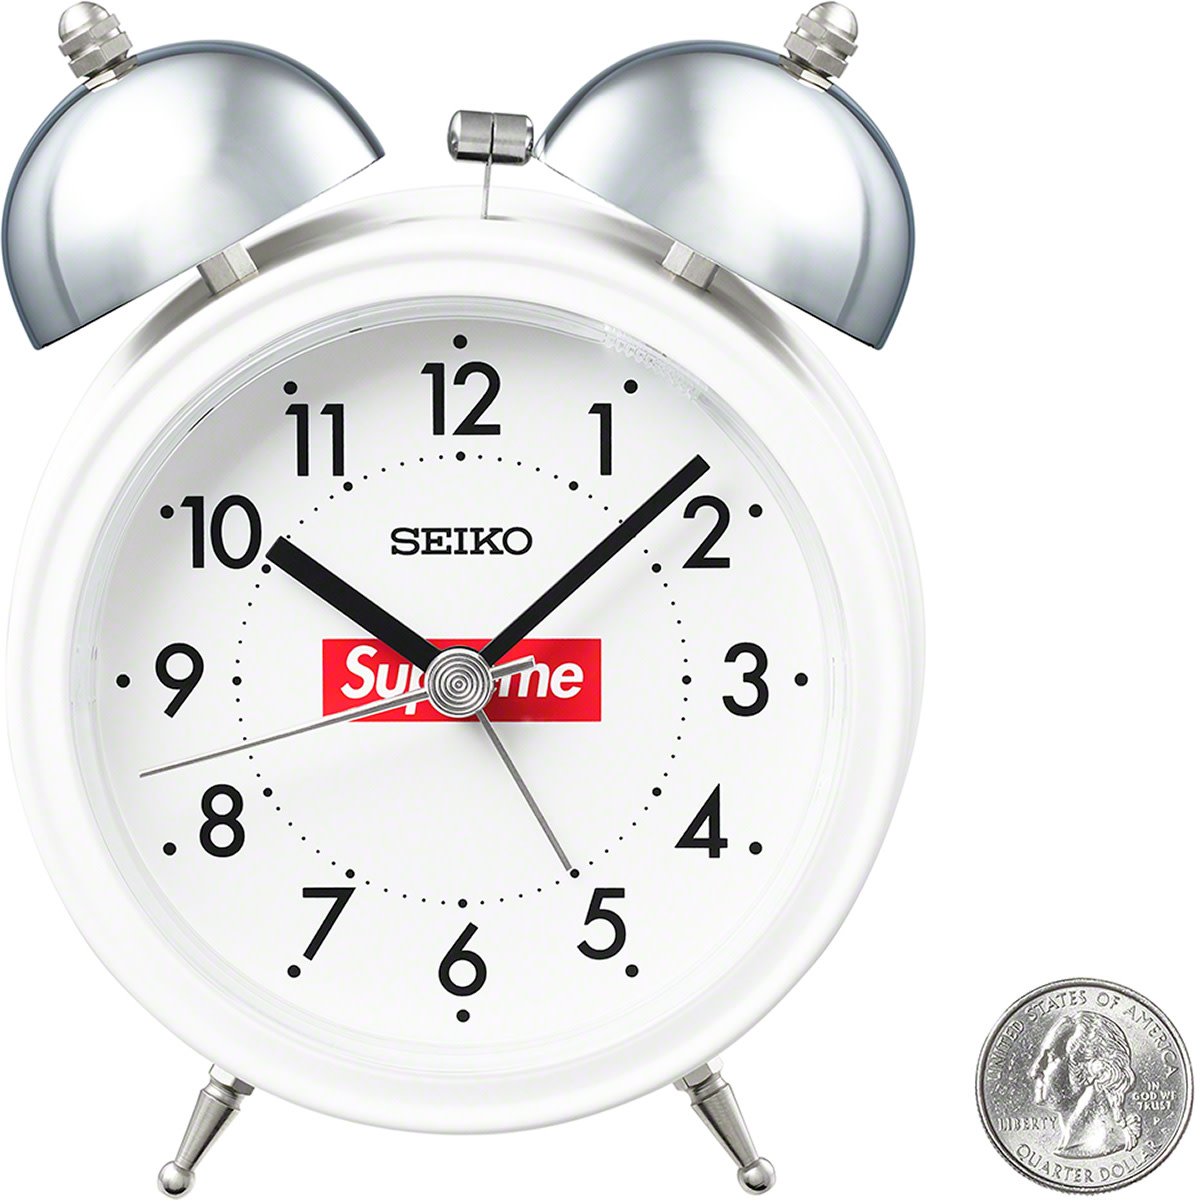 Supreme Louis Vuitton Clocks for Sale